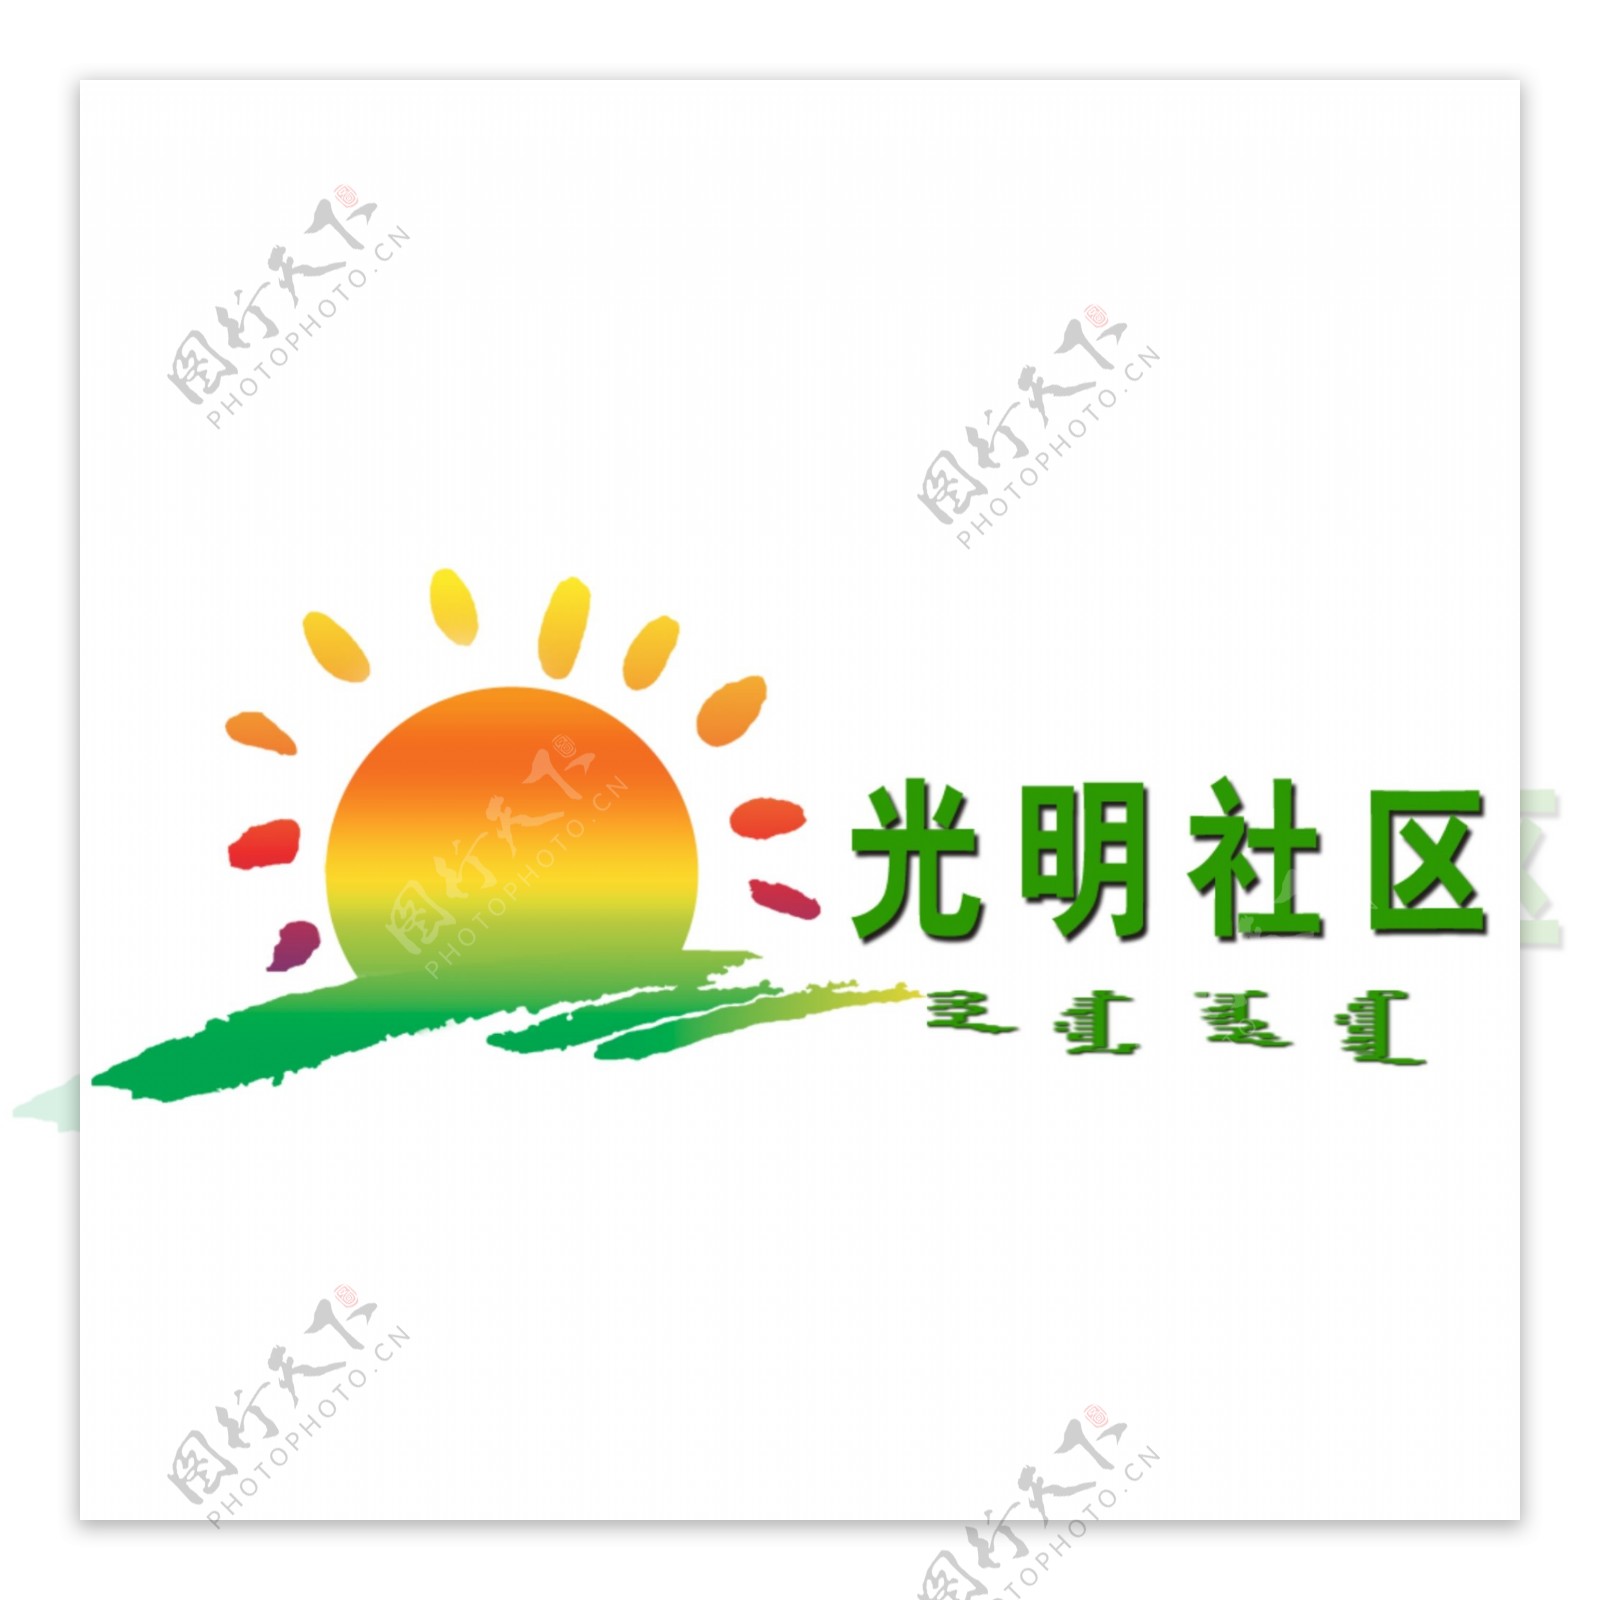 光明社区logo